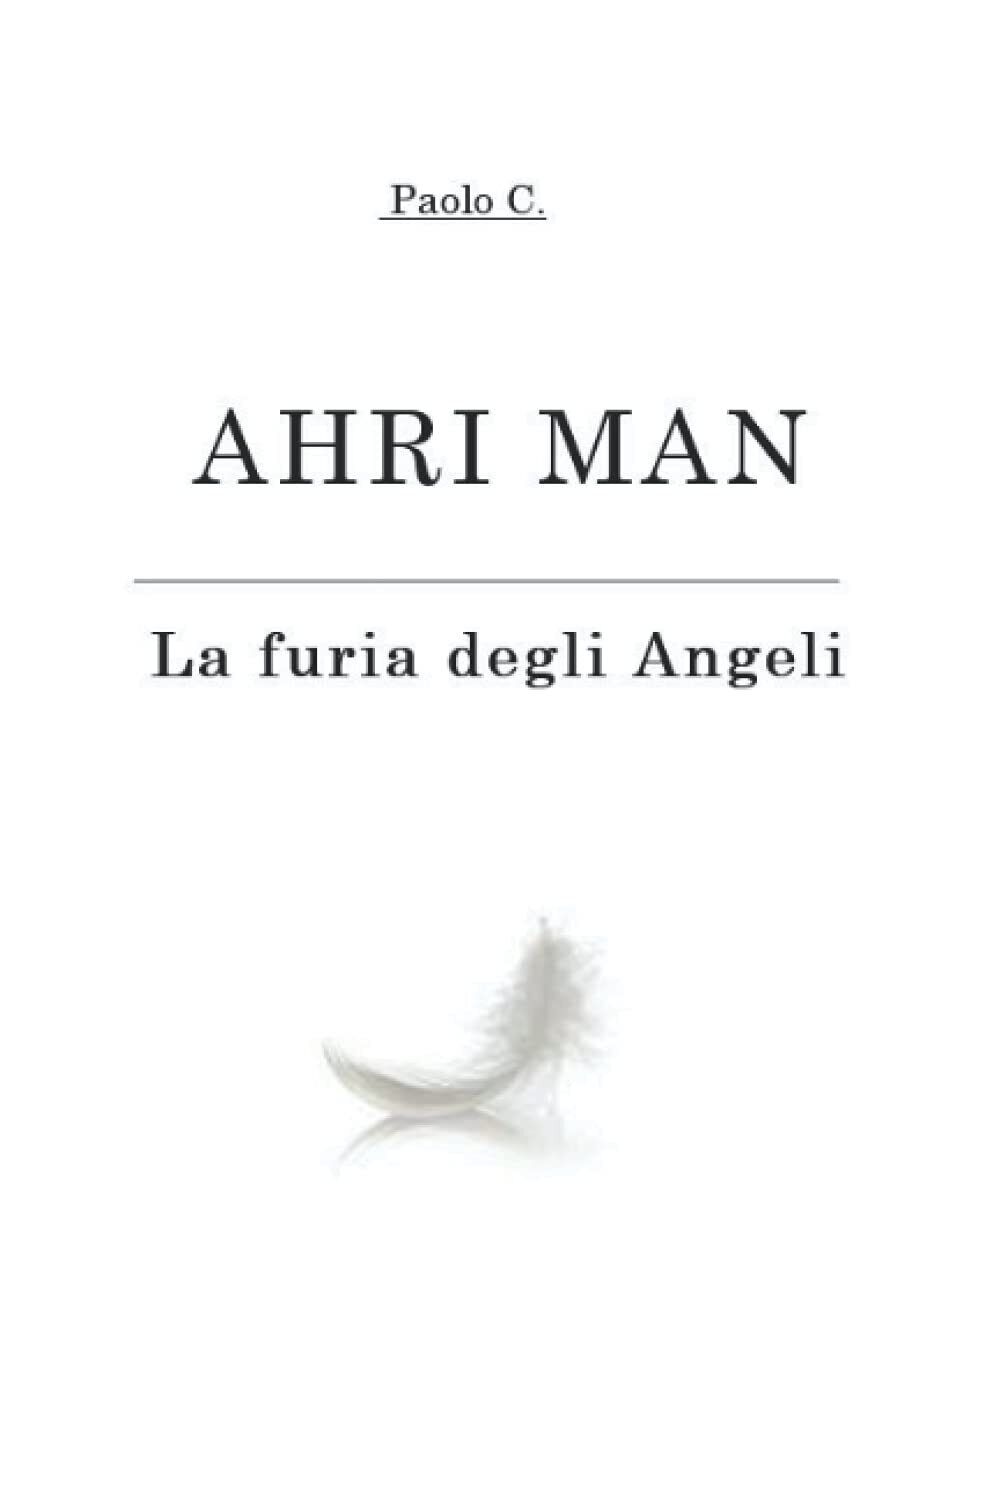 AHRI MAN: La furia degli Angeli - Paolo C. - ?Independently published, 2021